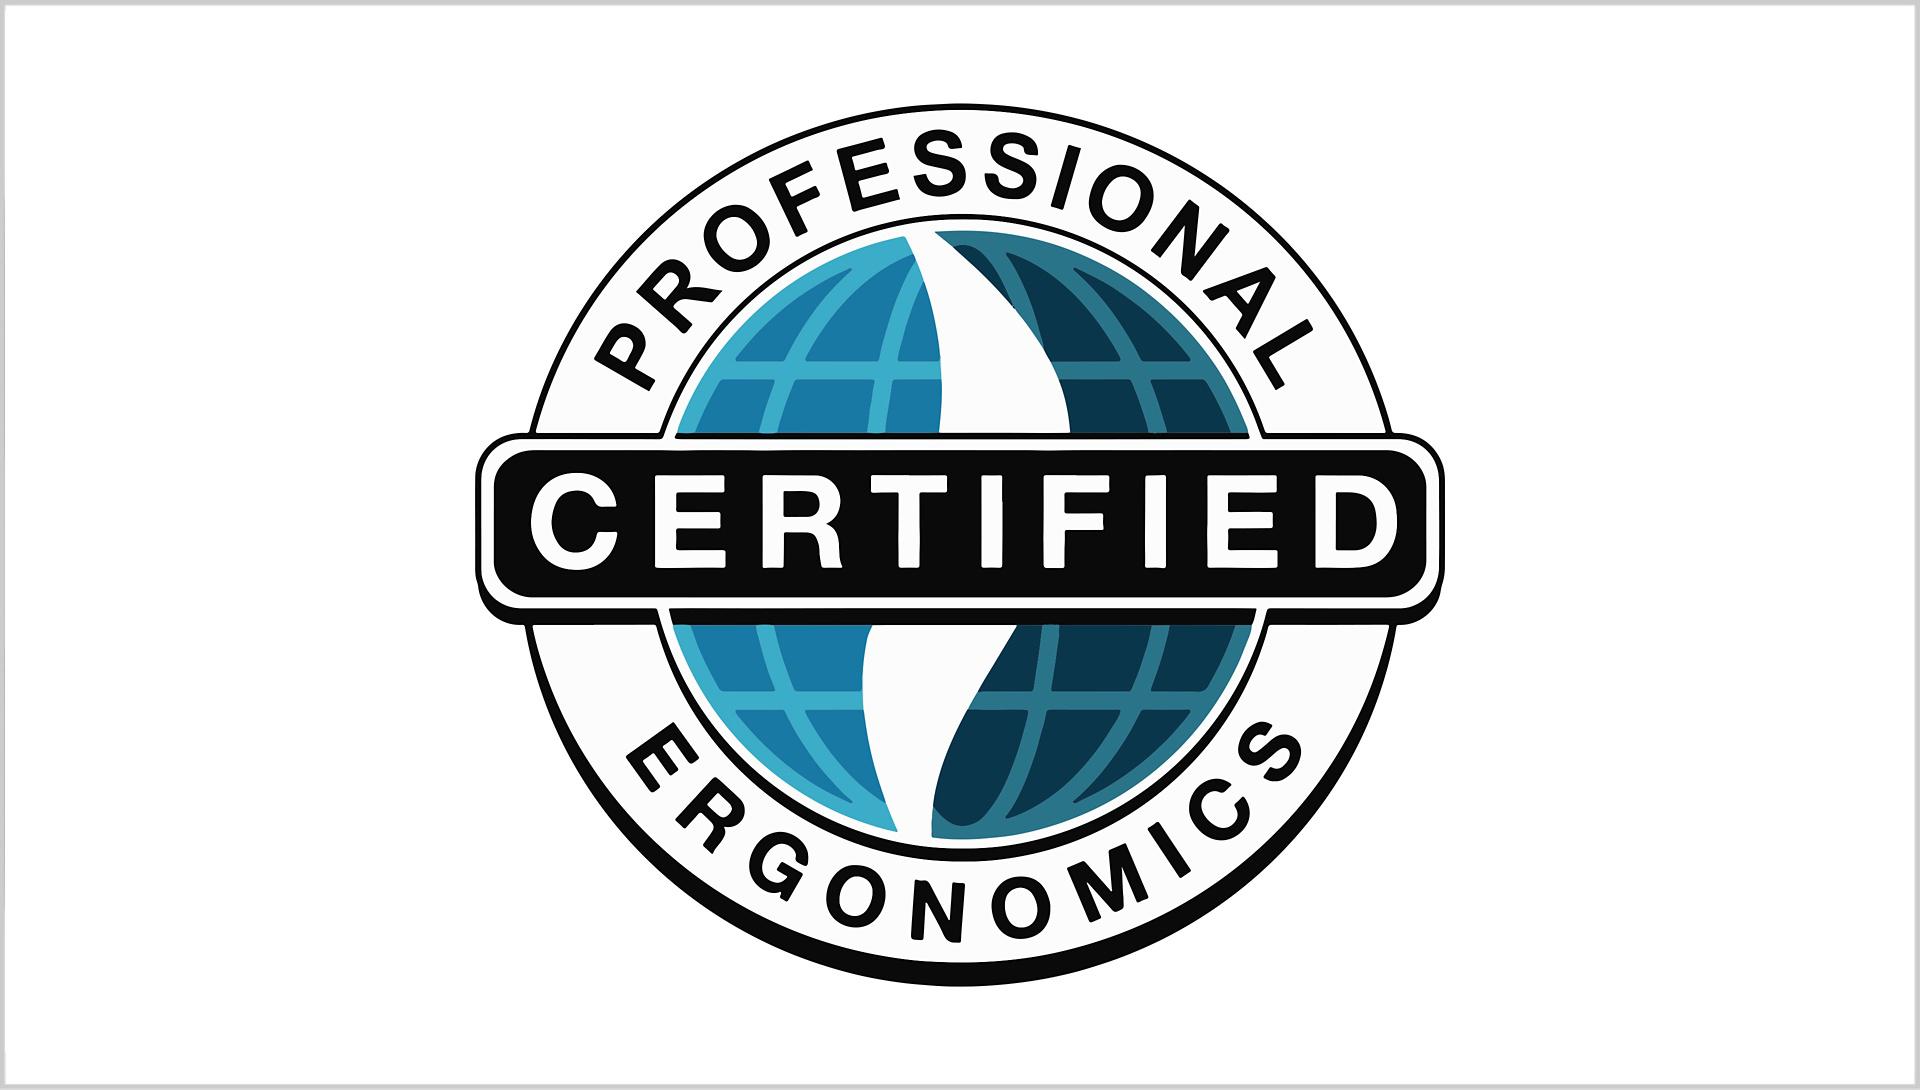 Dyson vacuum technology achieves United States Ergonomics certification.